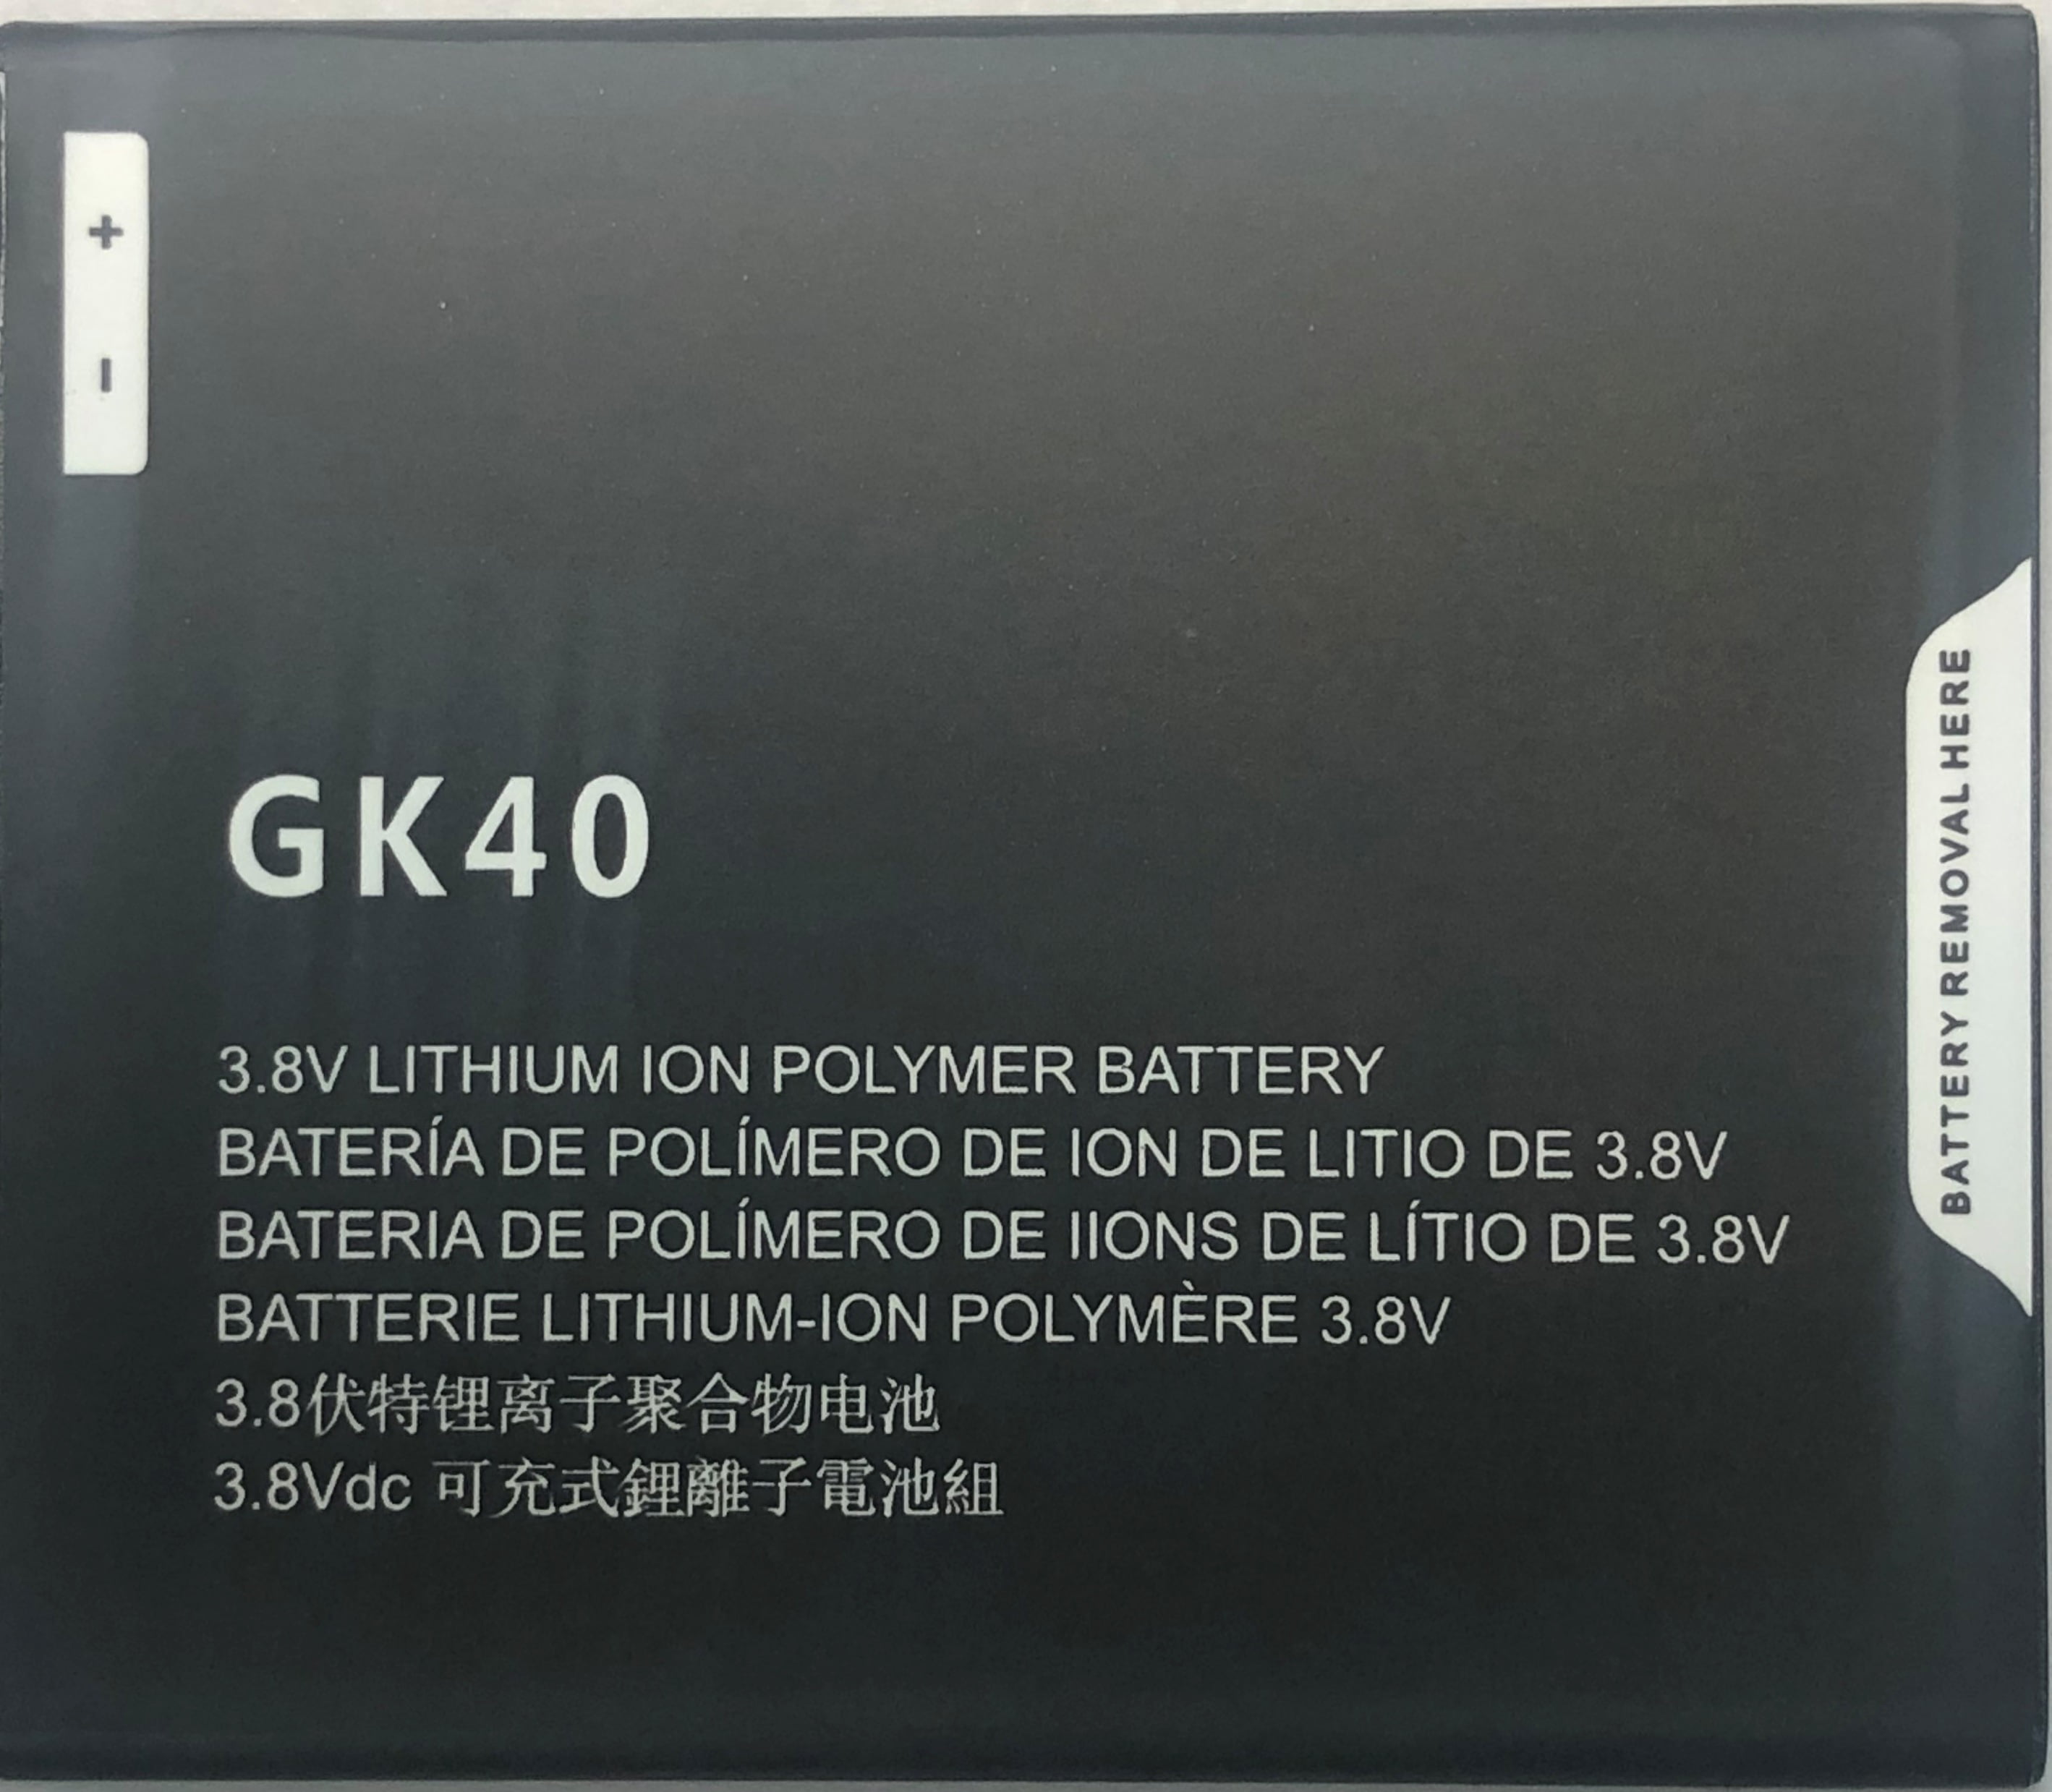 MOTOROLA GK40 GENUINE Original Battery Moto G4 G Play XT1607 XT1609 2800mAh